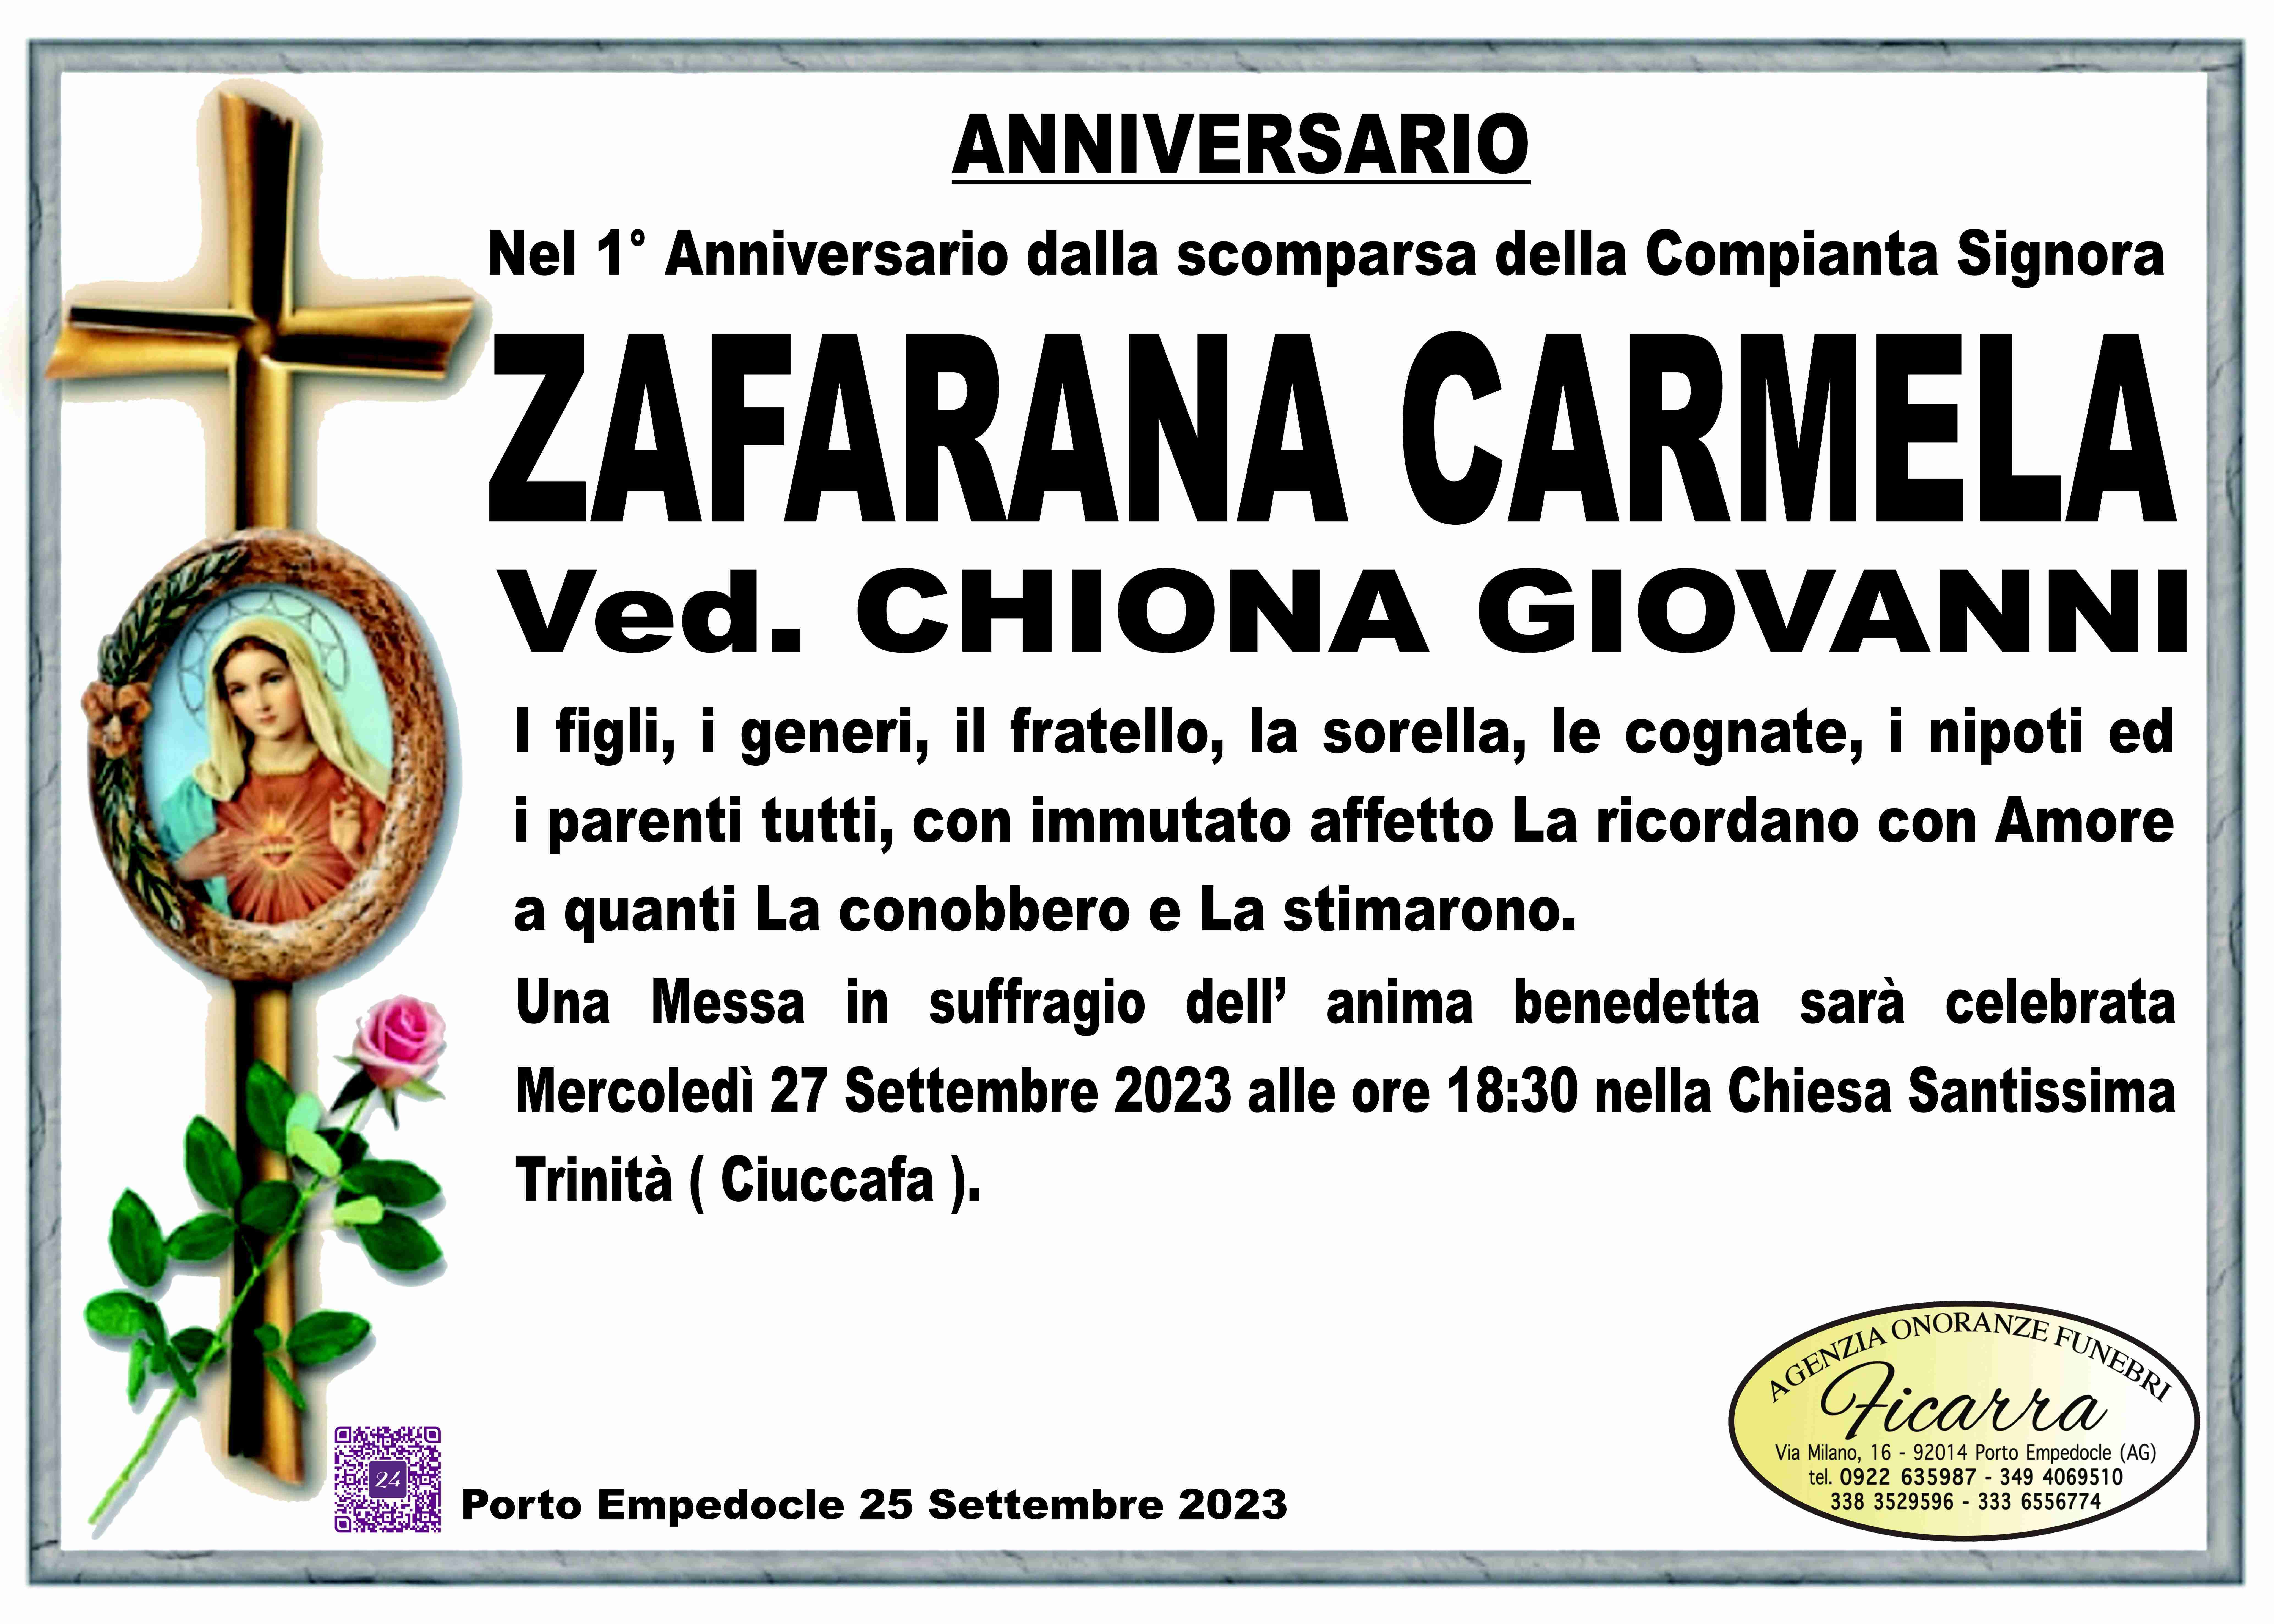 Carmela Zafarana